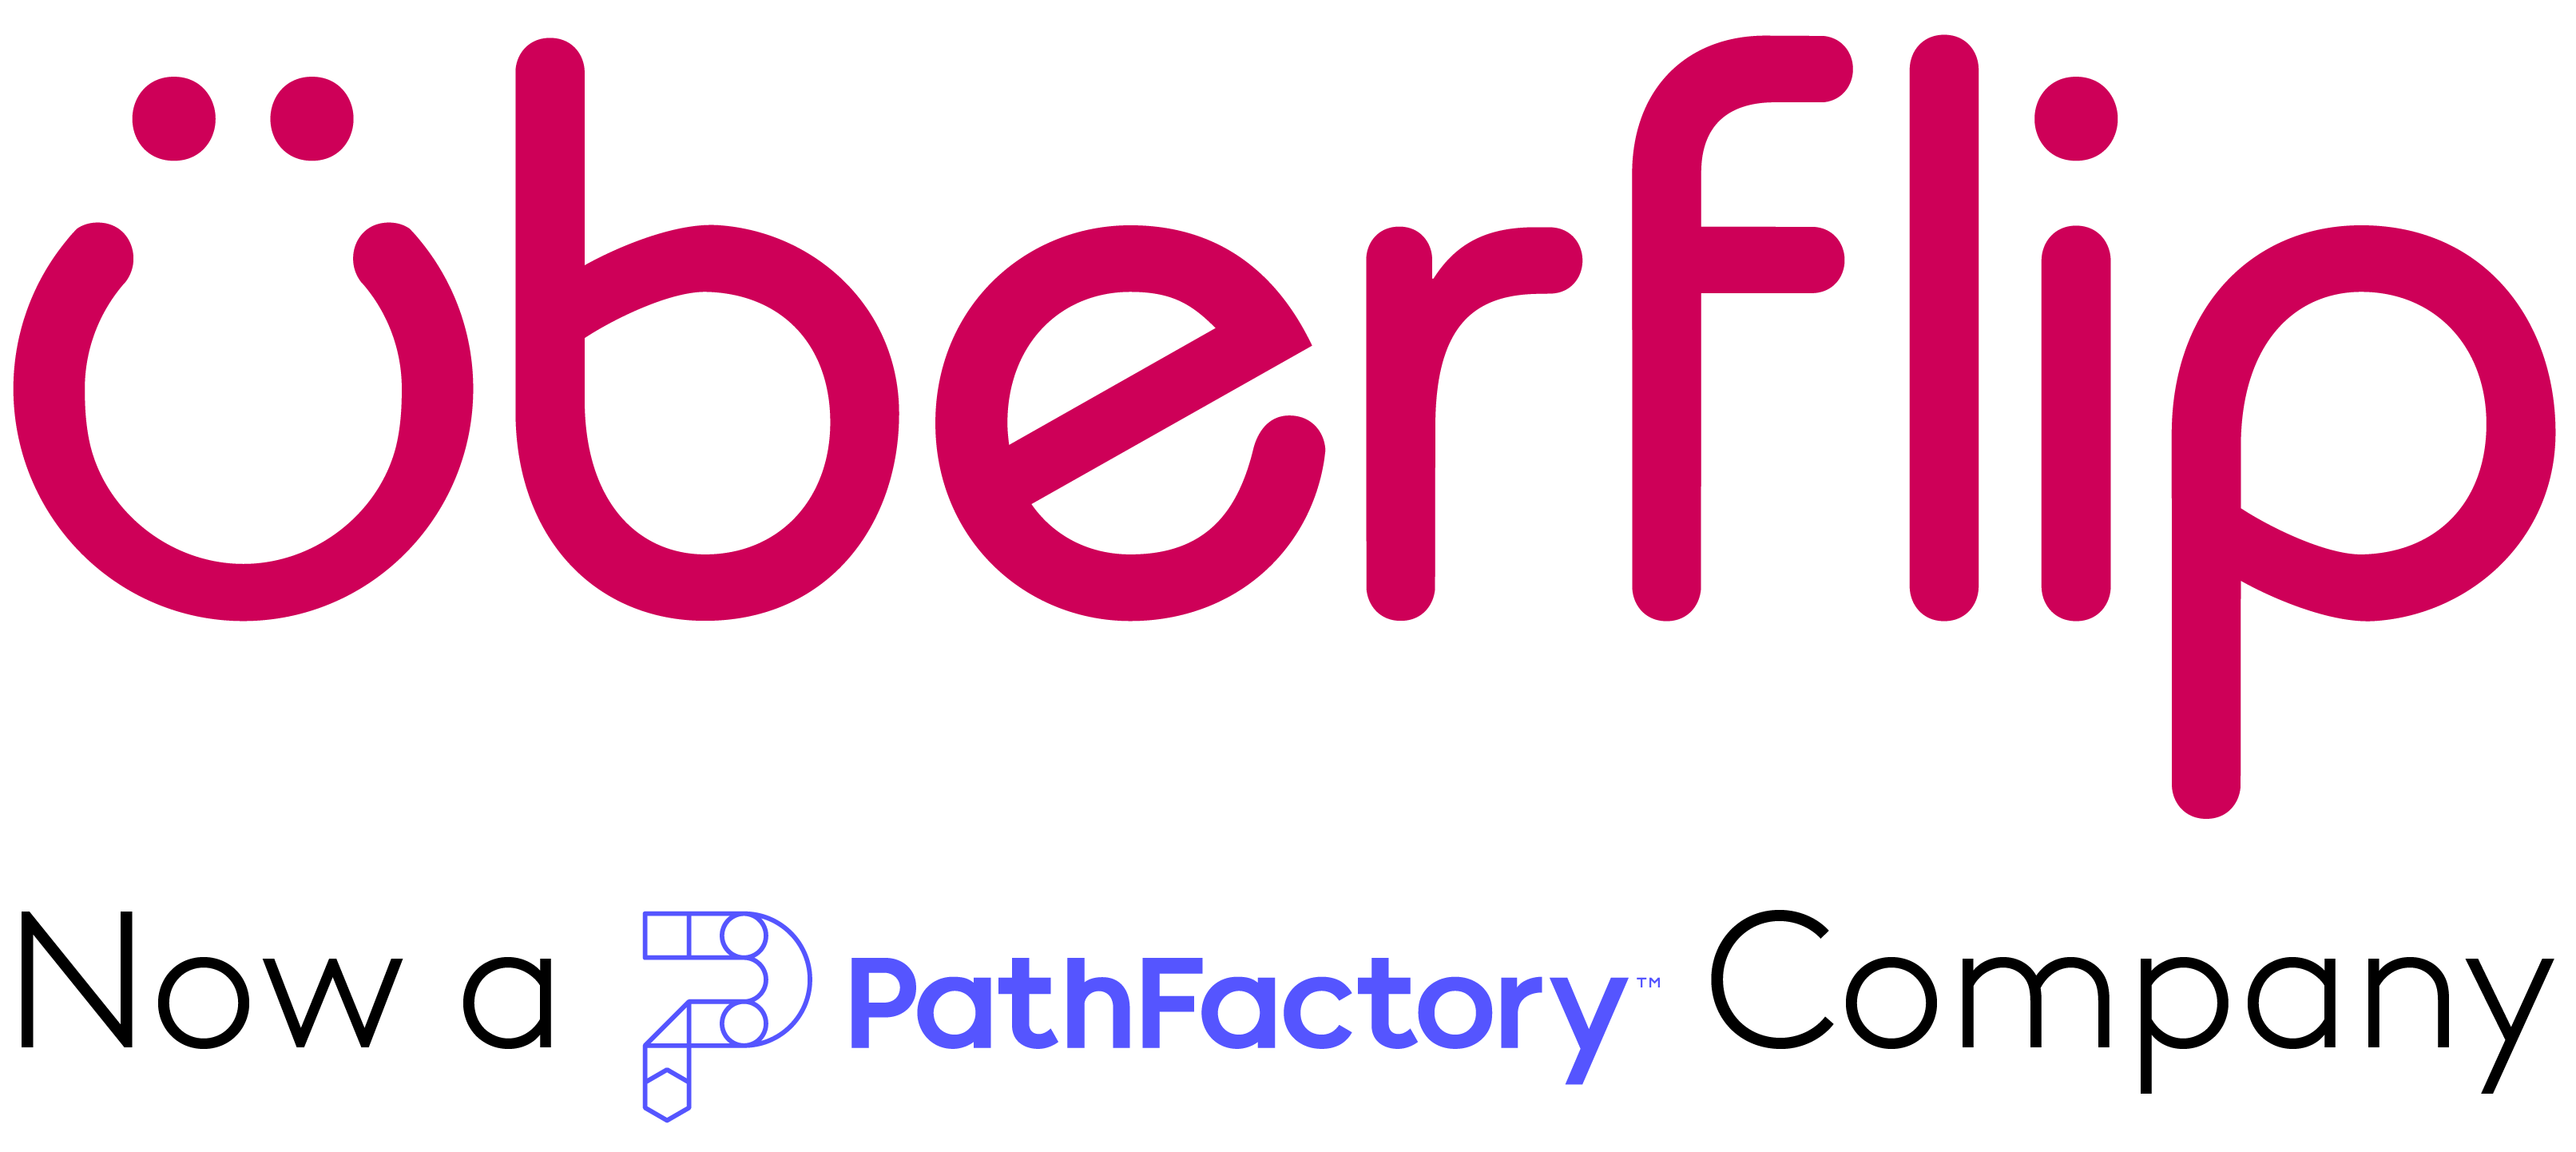 Uberflip | A PathFactory Company